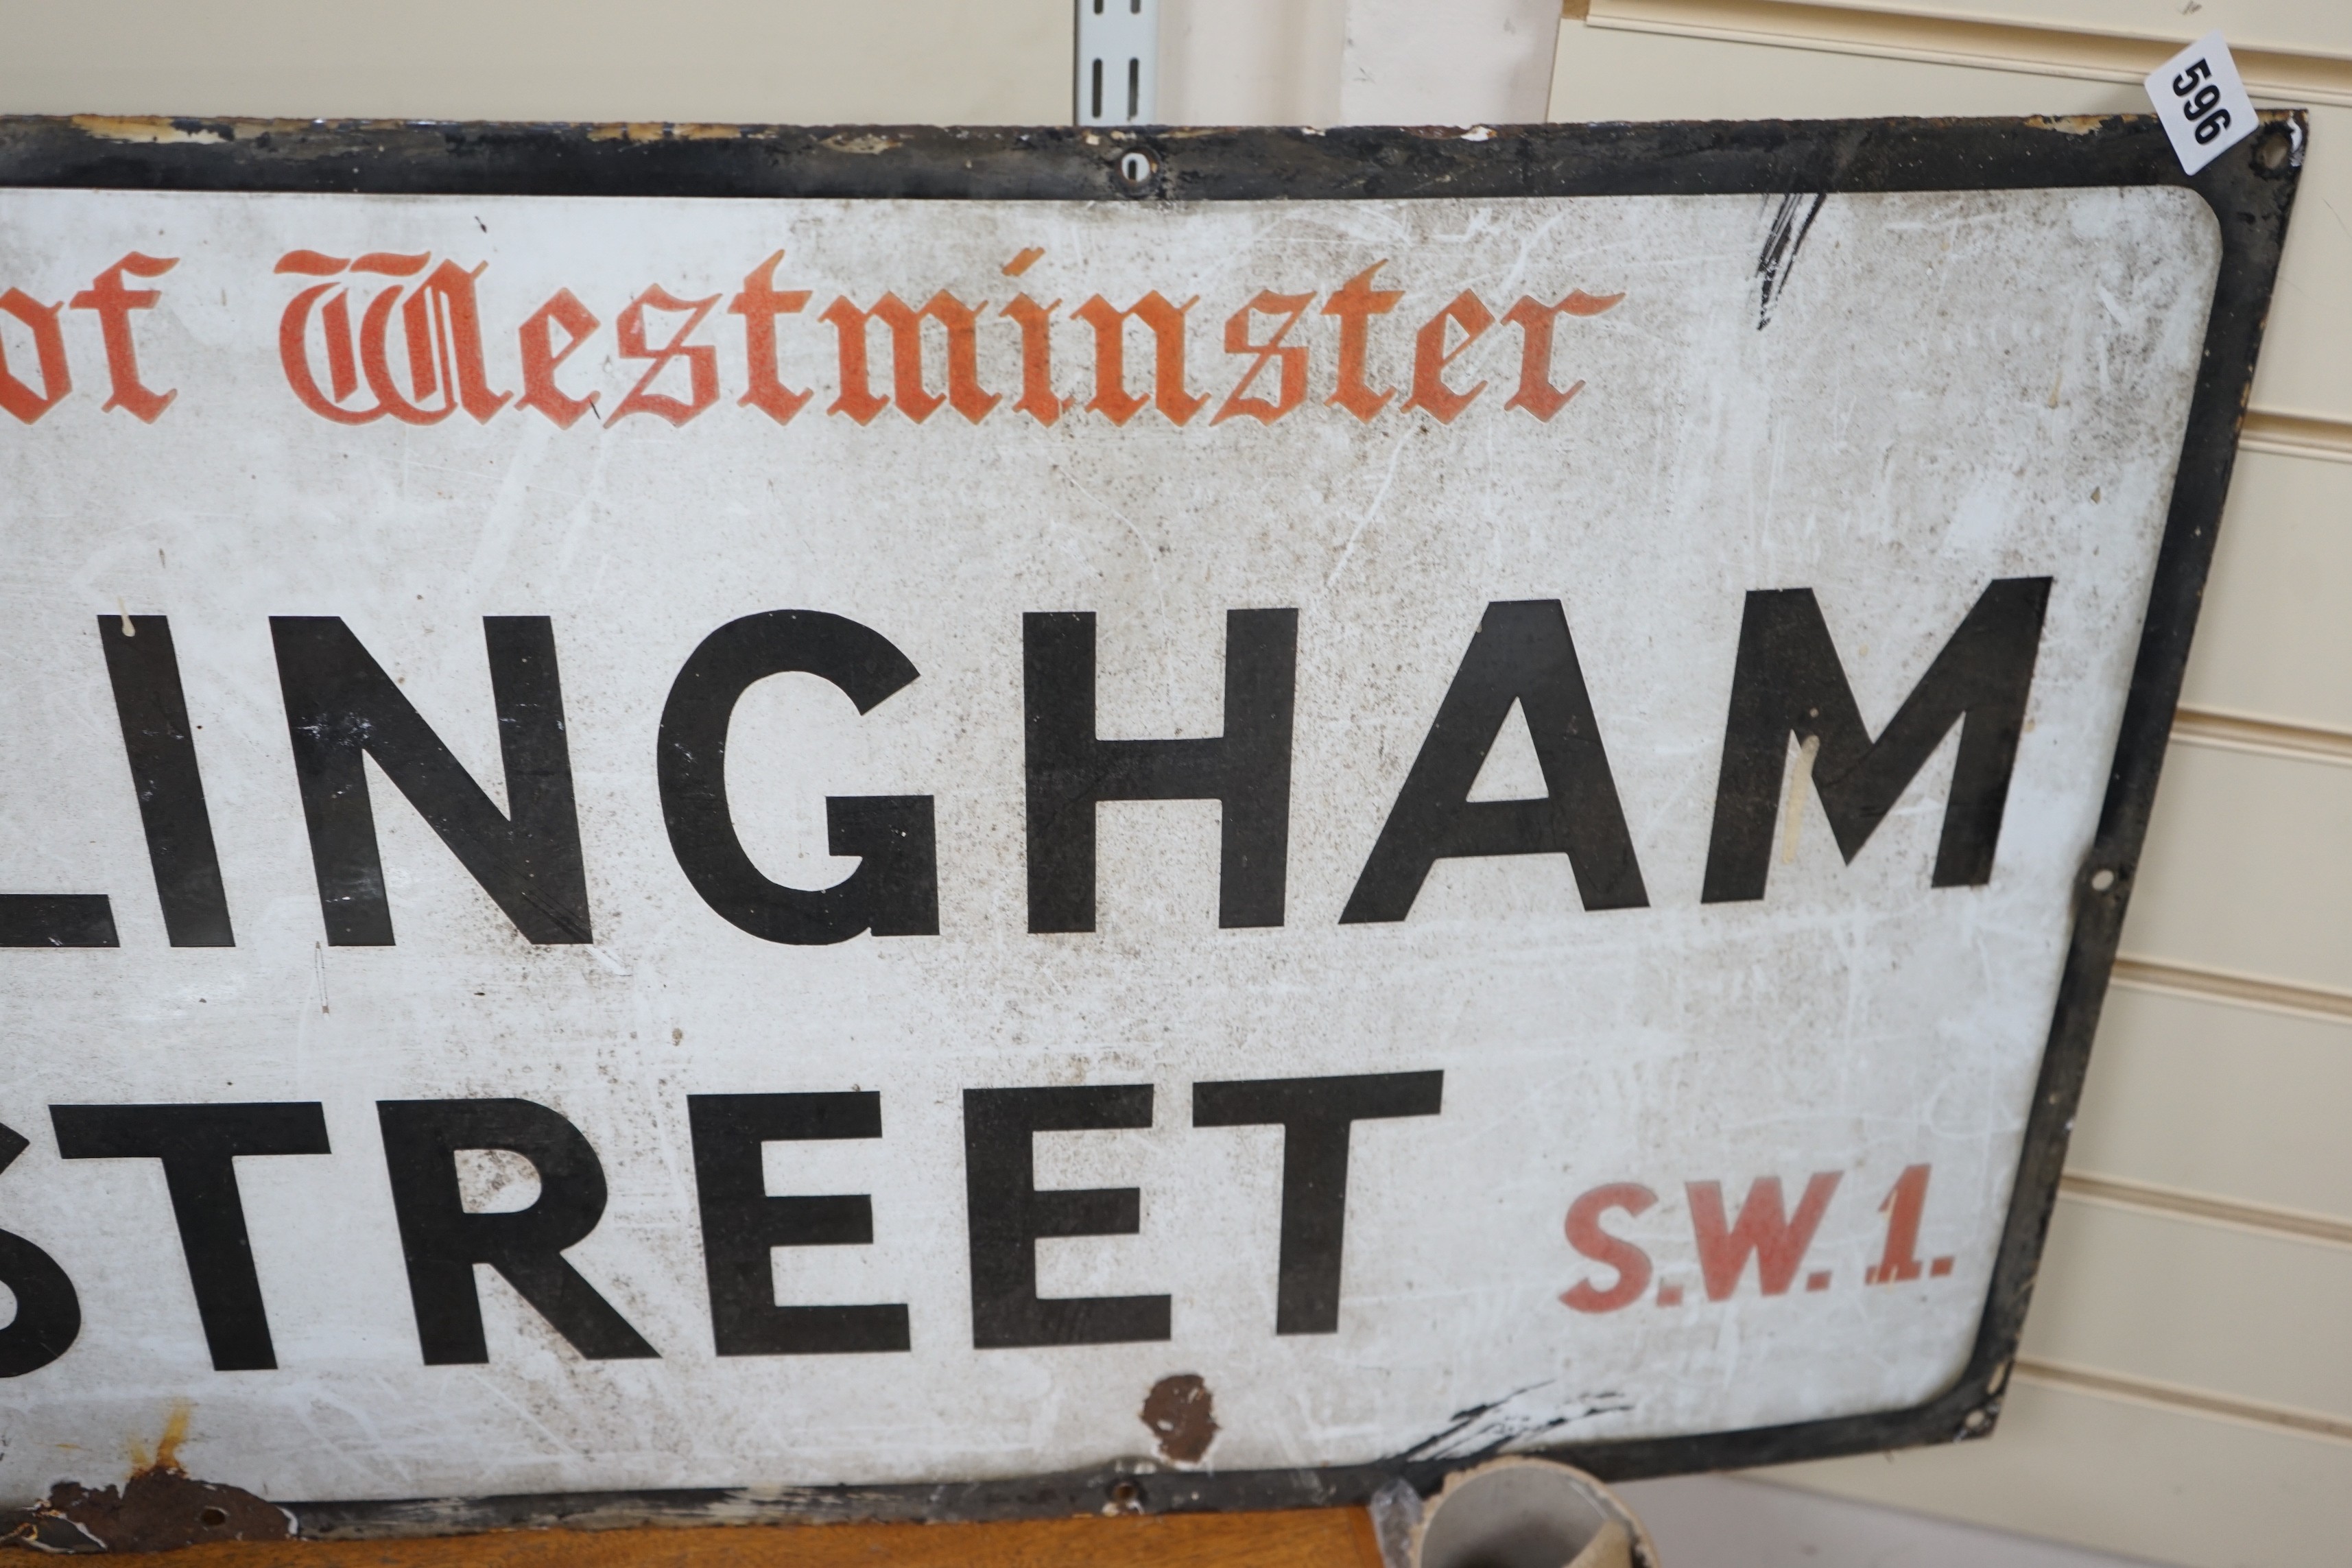 A City of Westminster ‘Gillingham Street’ enamelled road sign, 46x92cm